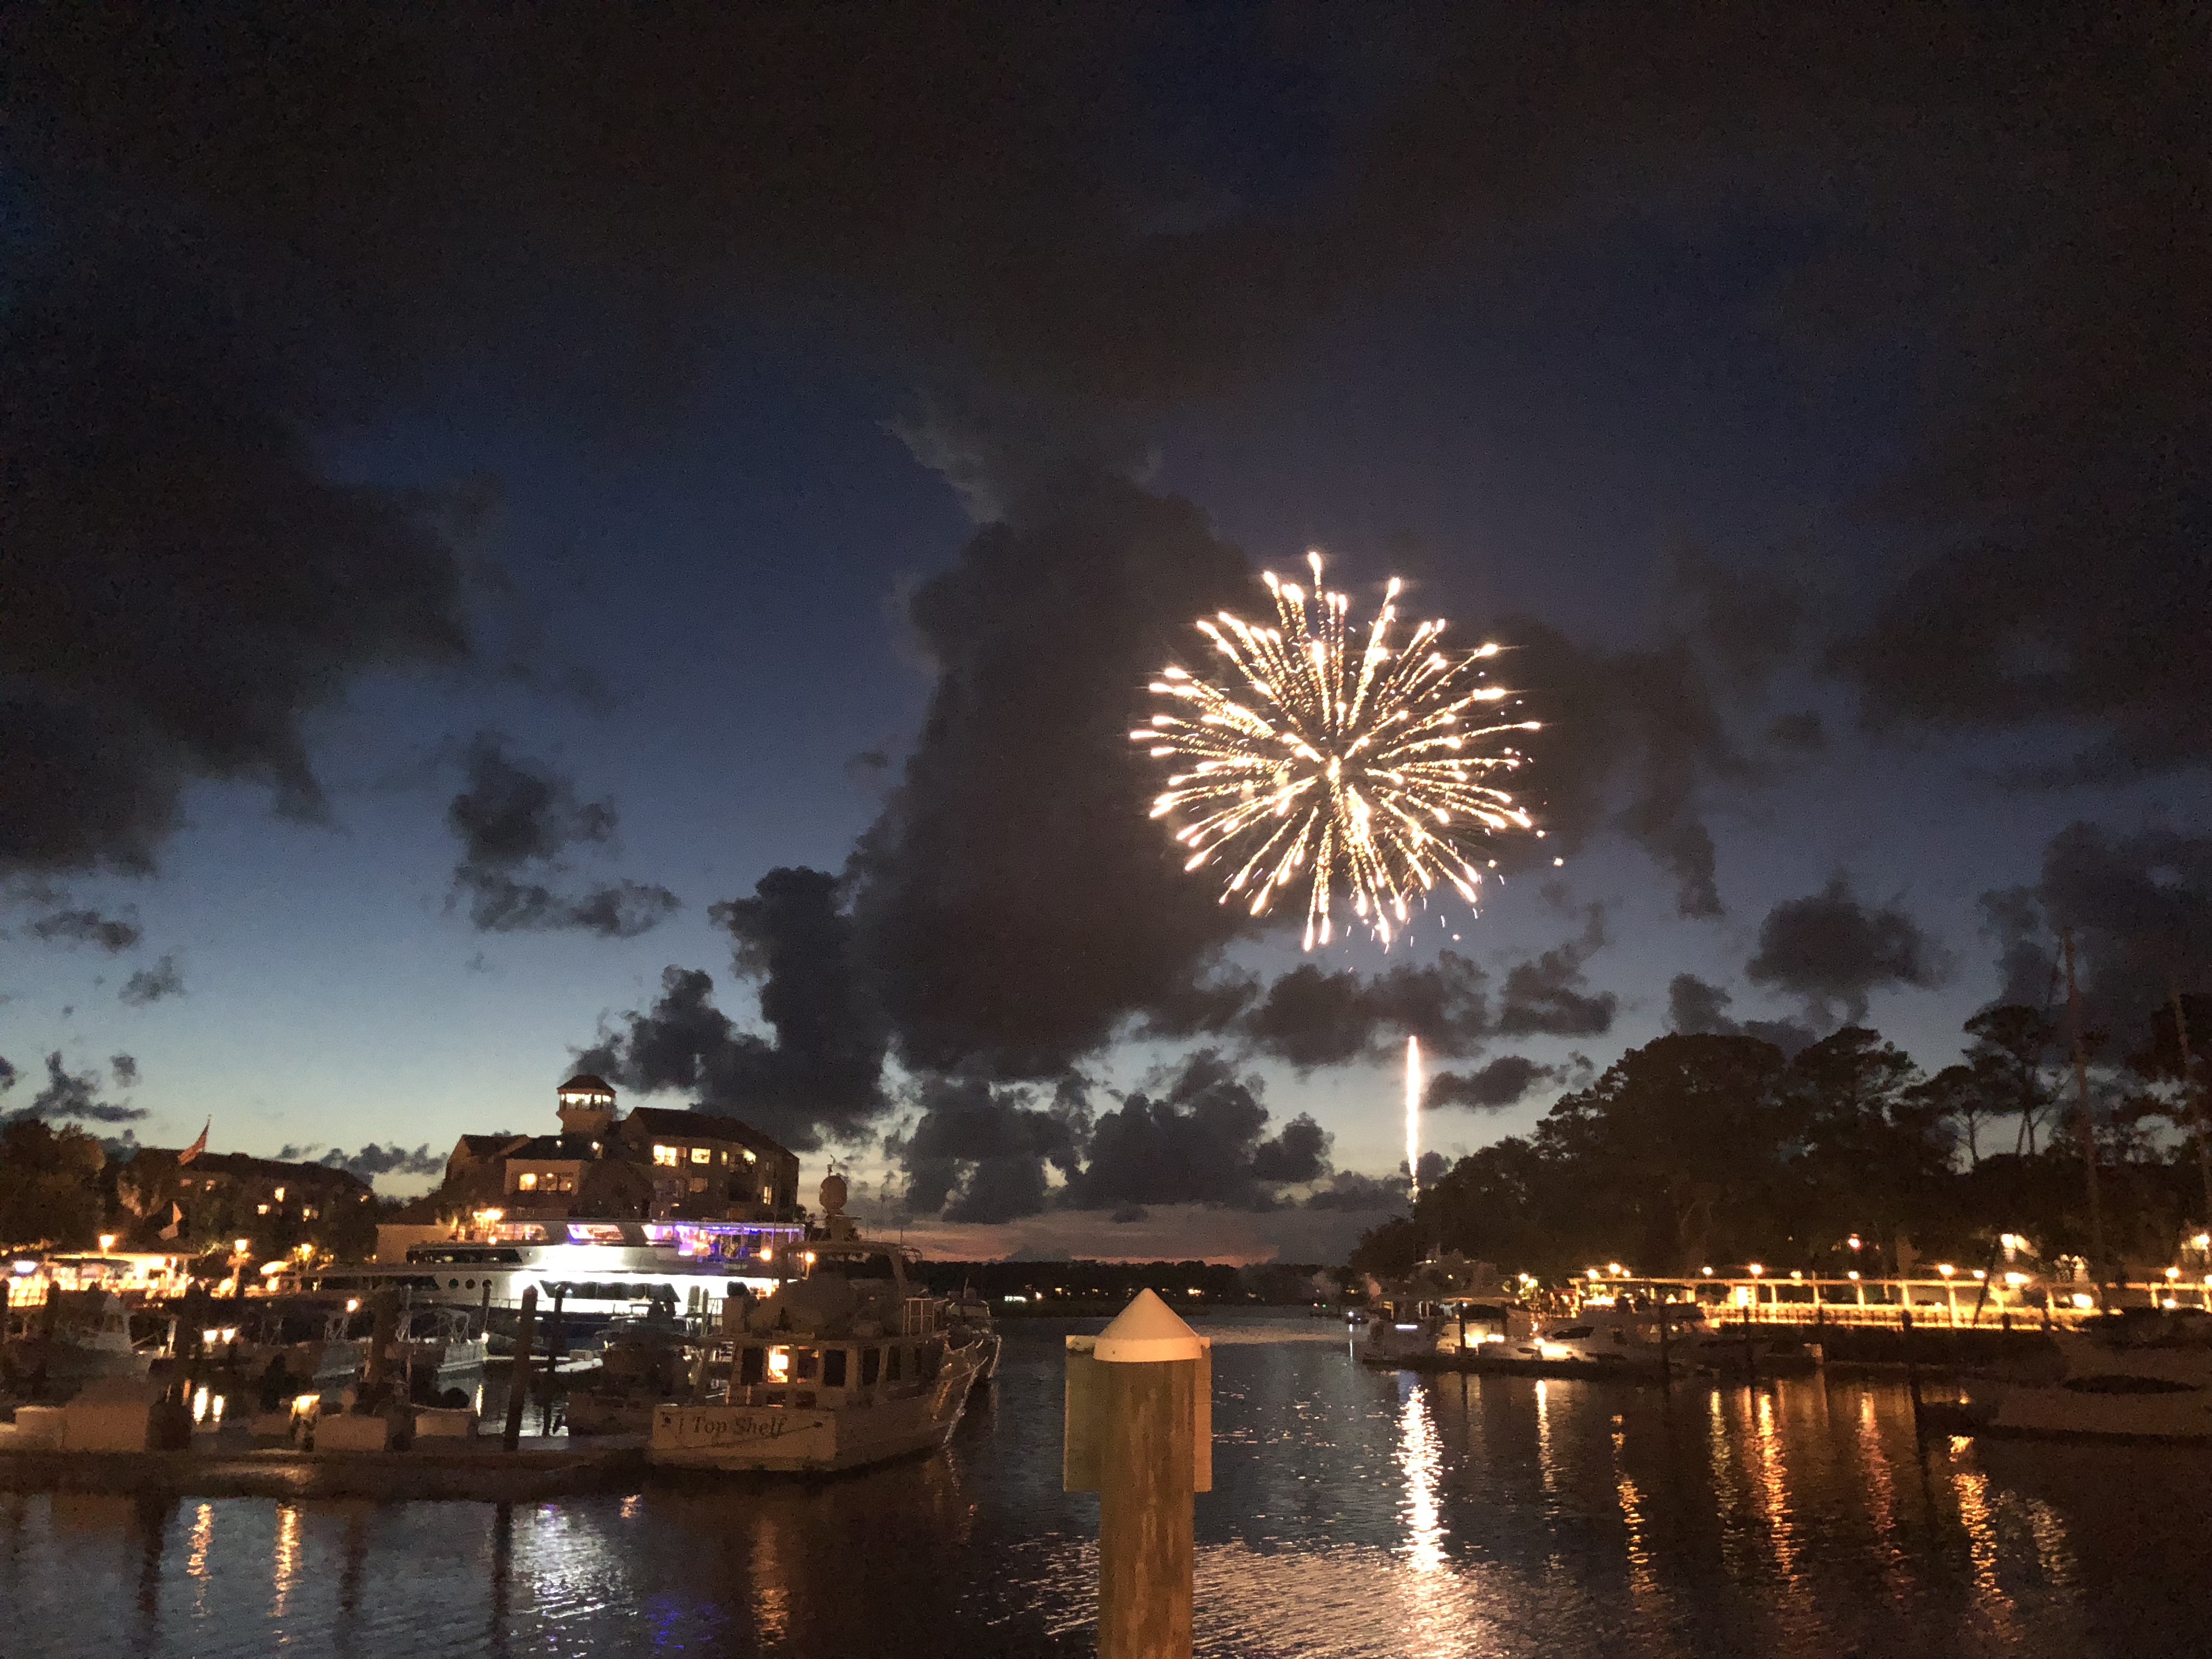 Fireworks in Shelter Cove Marina on Hilton Head Island, SC 2018